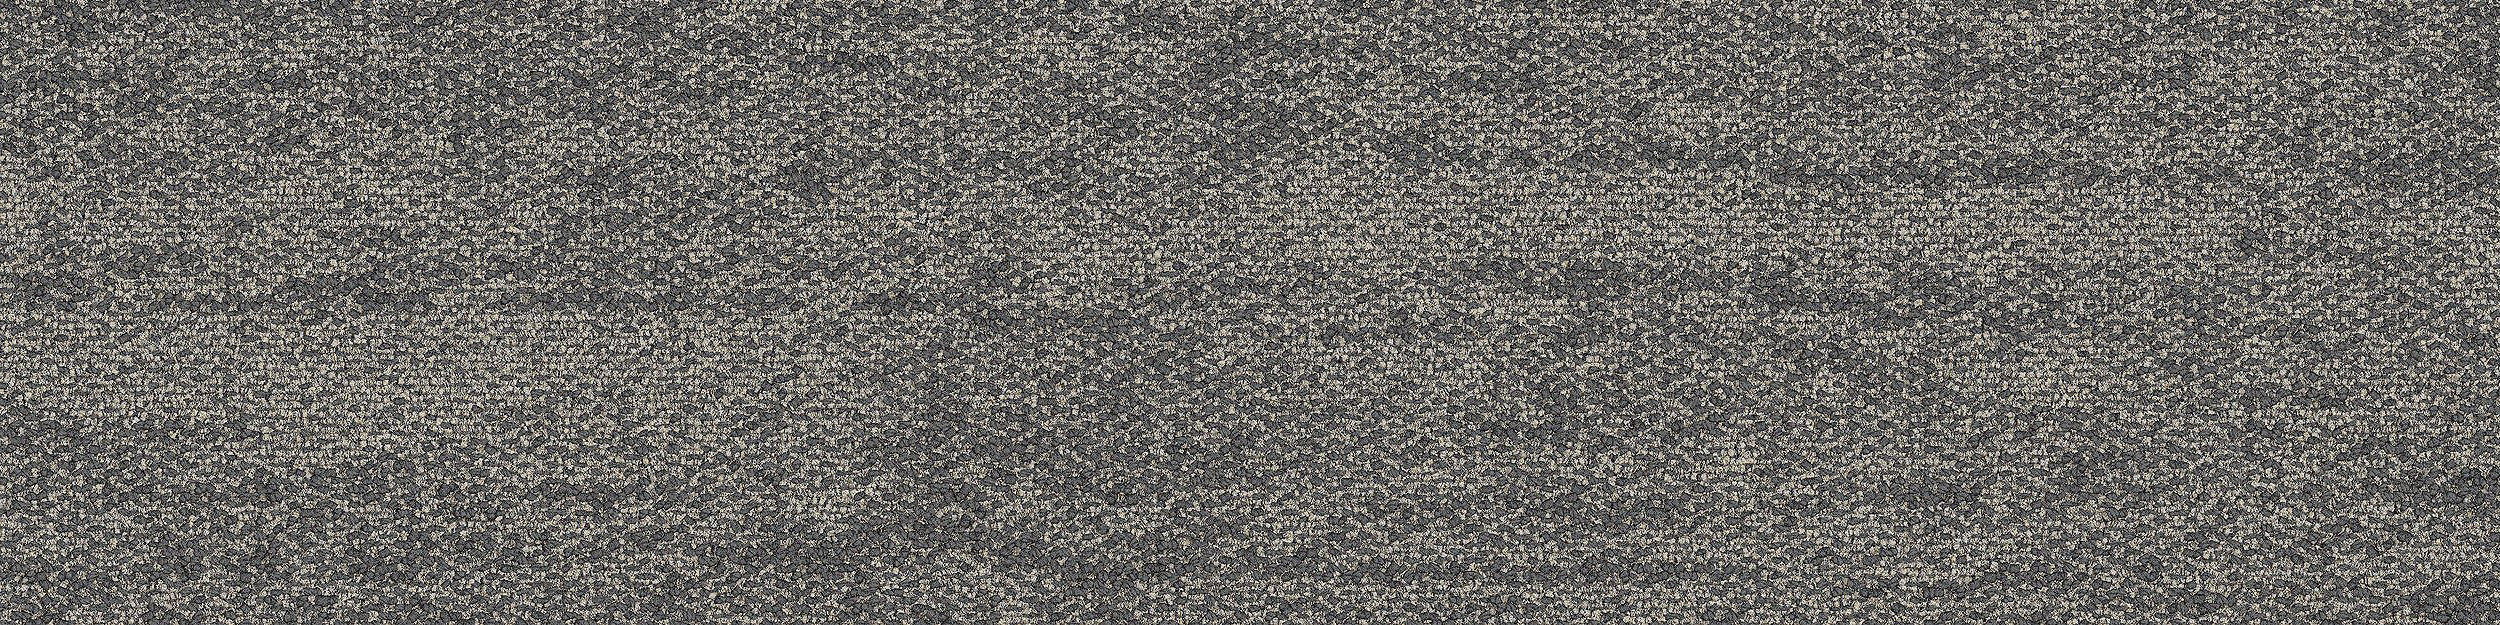 Open Air 402 Carpet Tile In Nickel numéro d’image 6